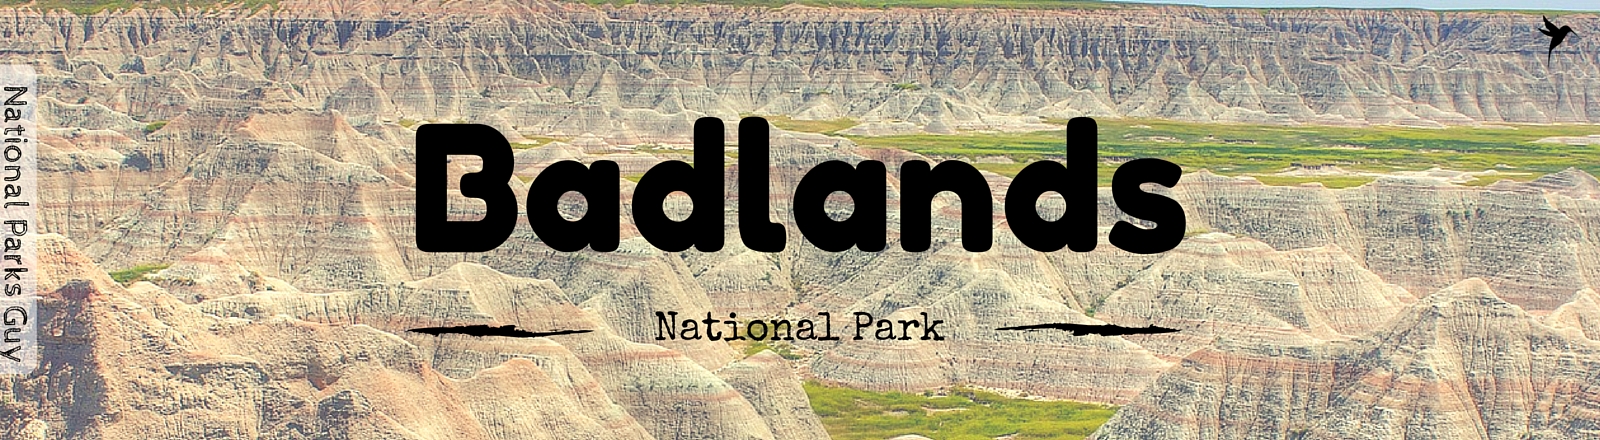 Badlands National Park, USA, National Parks Guy, Stories, Tales, Adventures, Wildlife